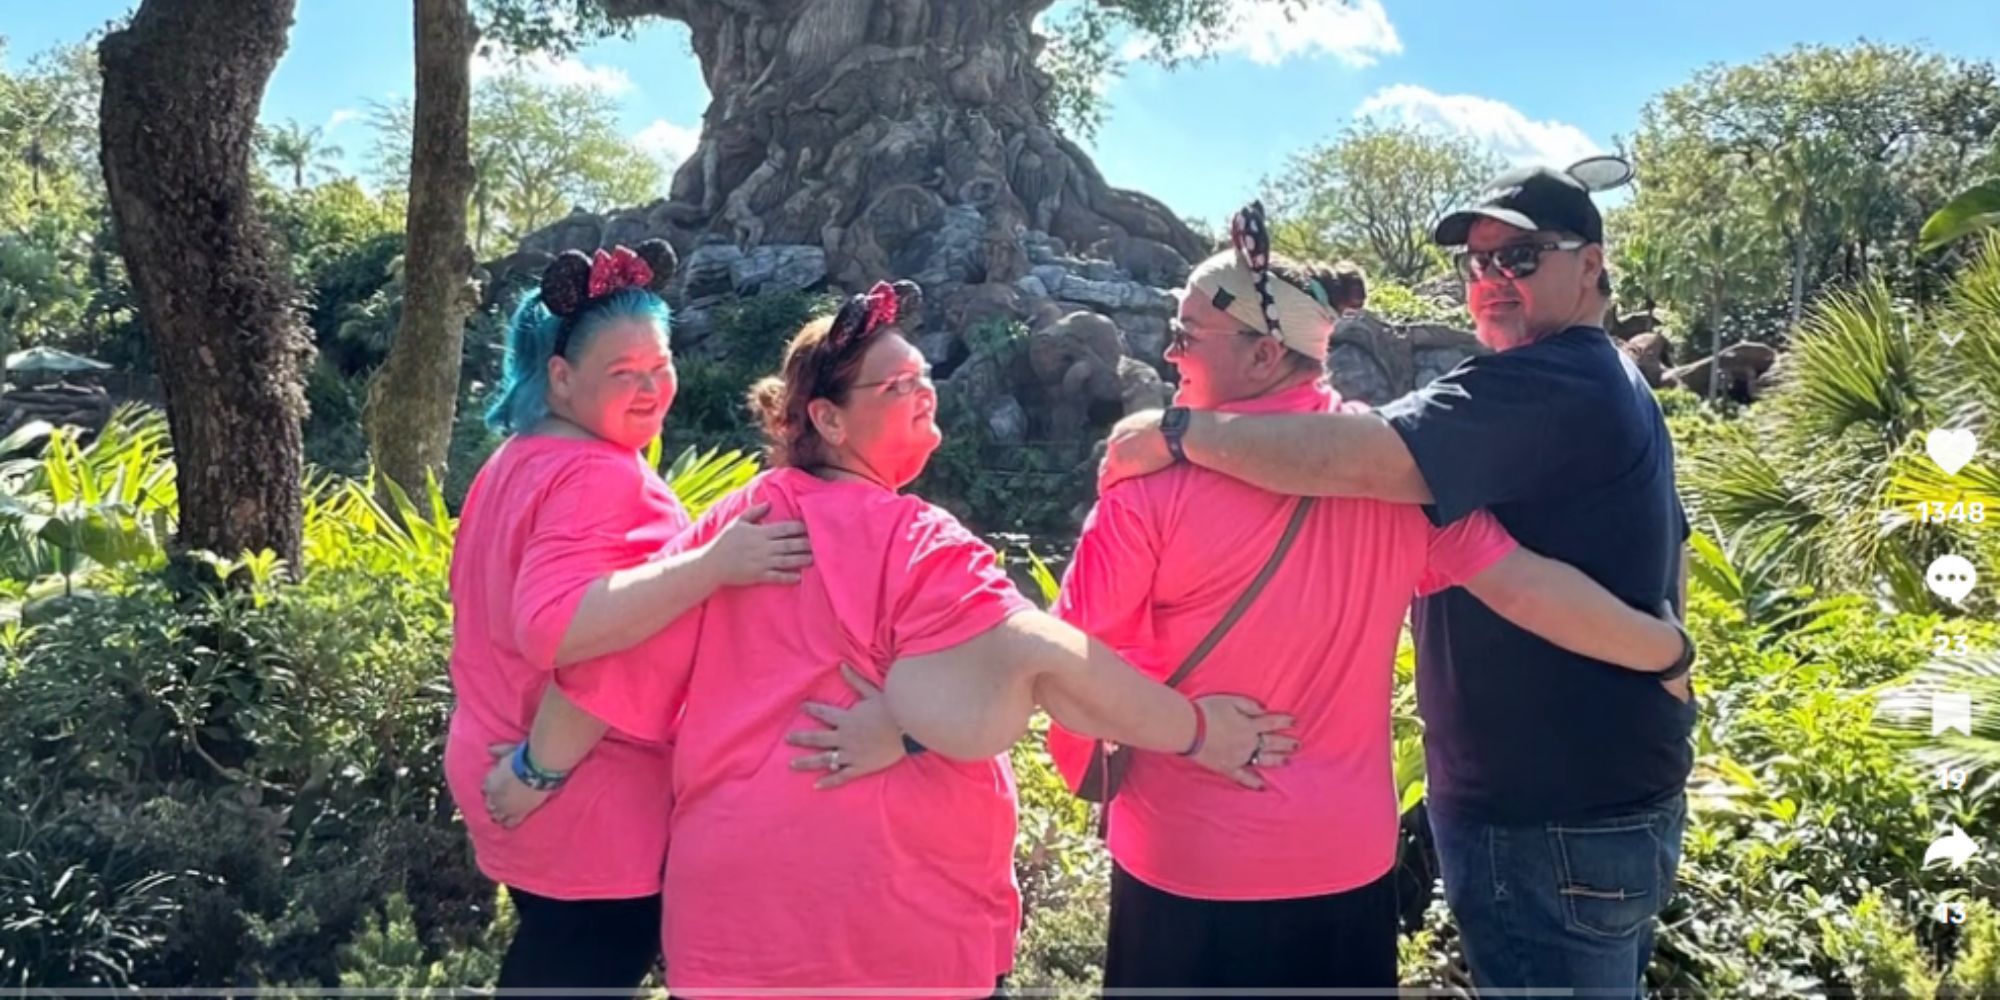 1000-lb Sisters Amy Slaton, Tammy Slaton, Chris Combs & Brittany Combs at Disney Animal Kingdom Tree Of Life, looking at the tree, turned slightly back to camera